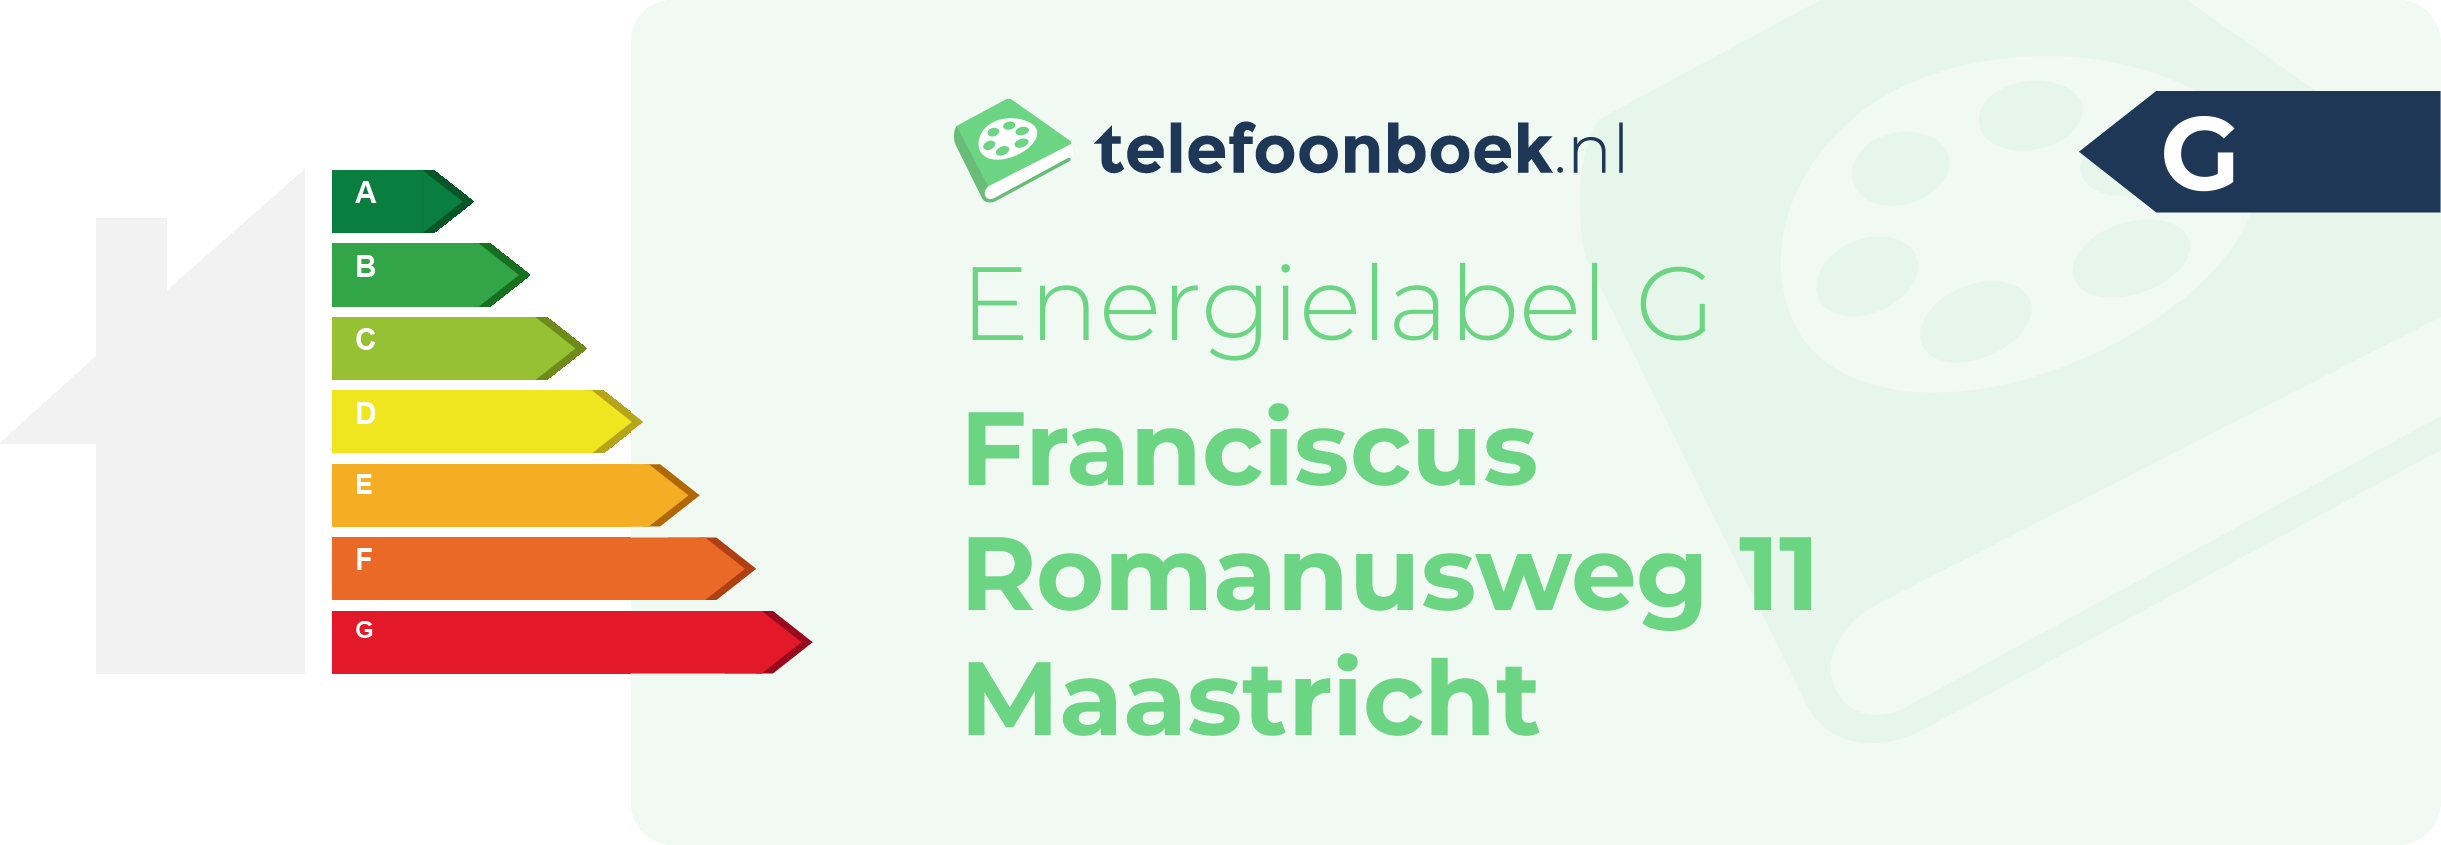 Energielabel Franciscus Romanusweg 11 Maastricht